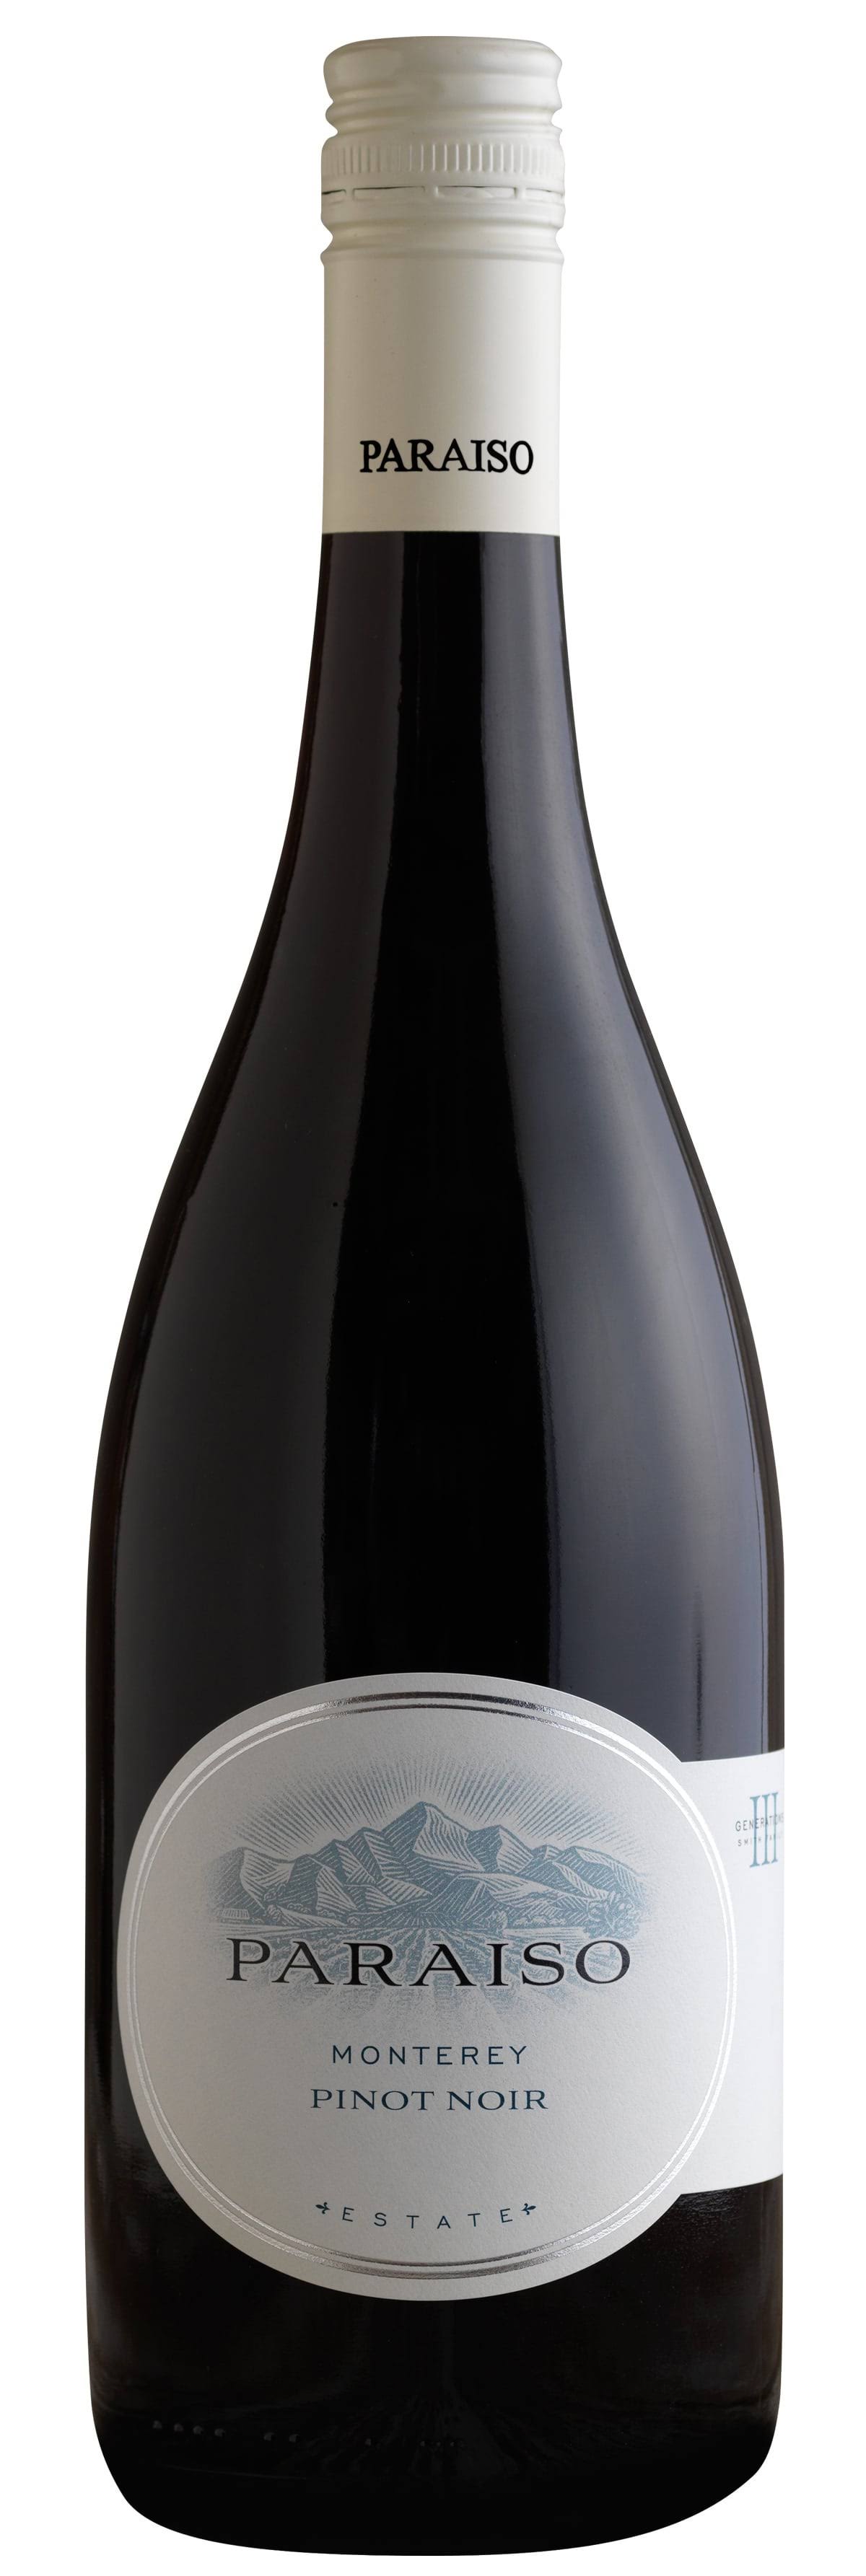 Paraiso Vineyards Pinot Noir 2015 Red Wine from California - 750ml